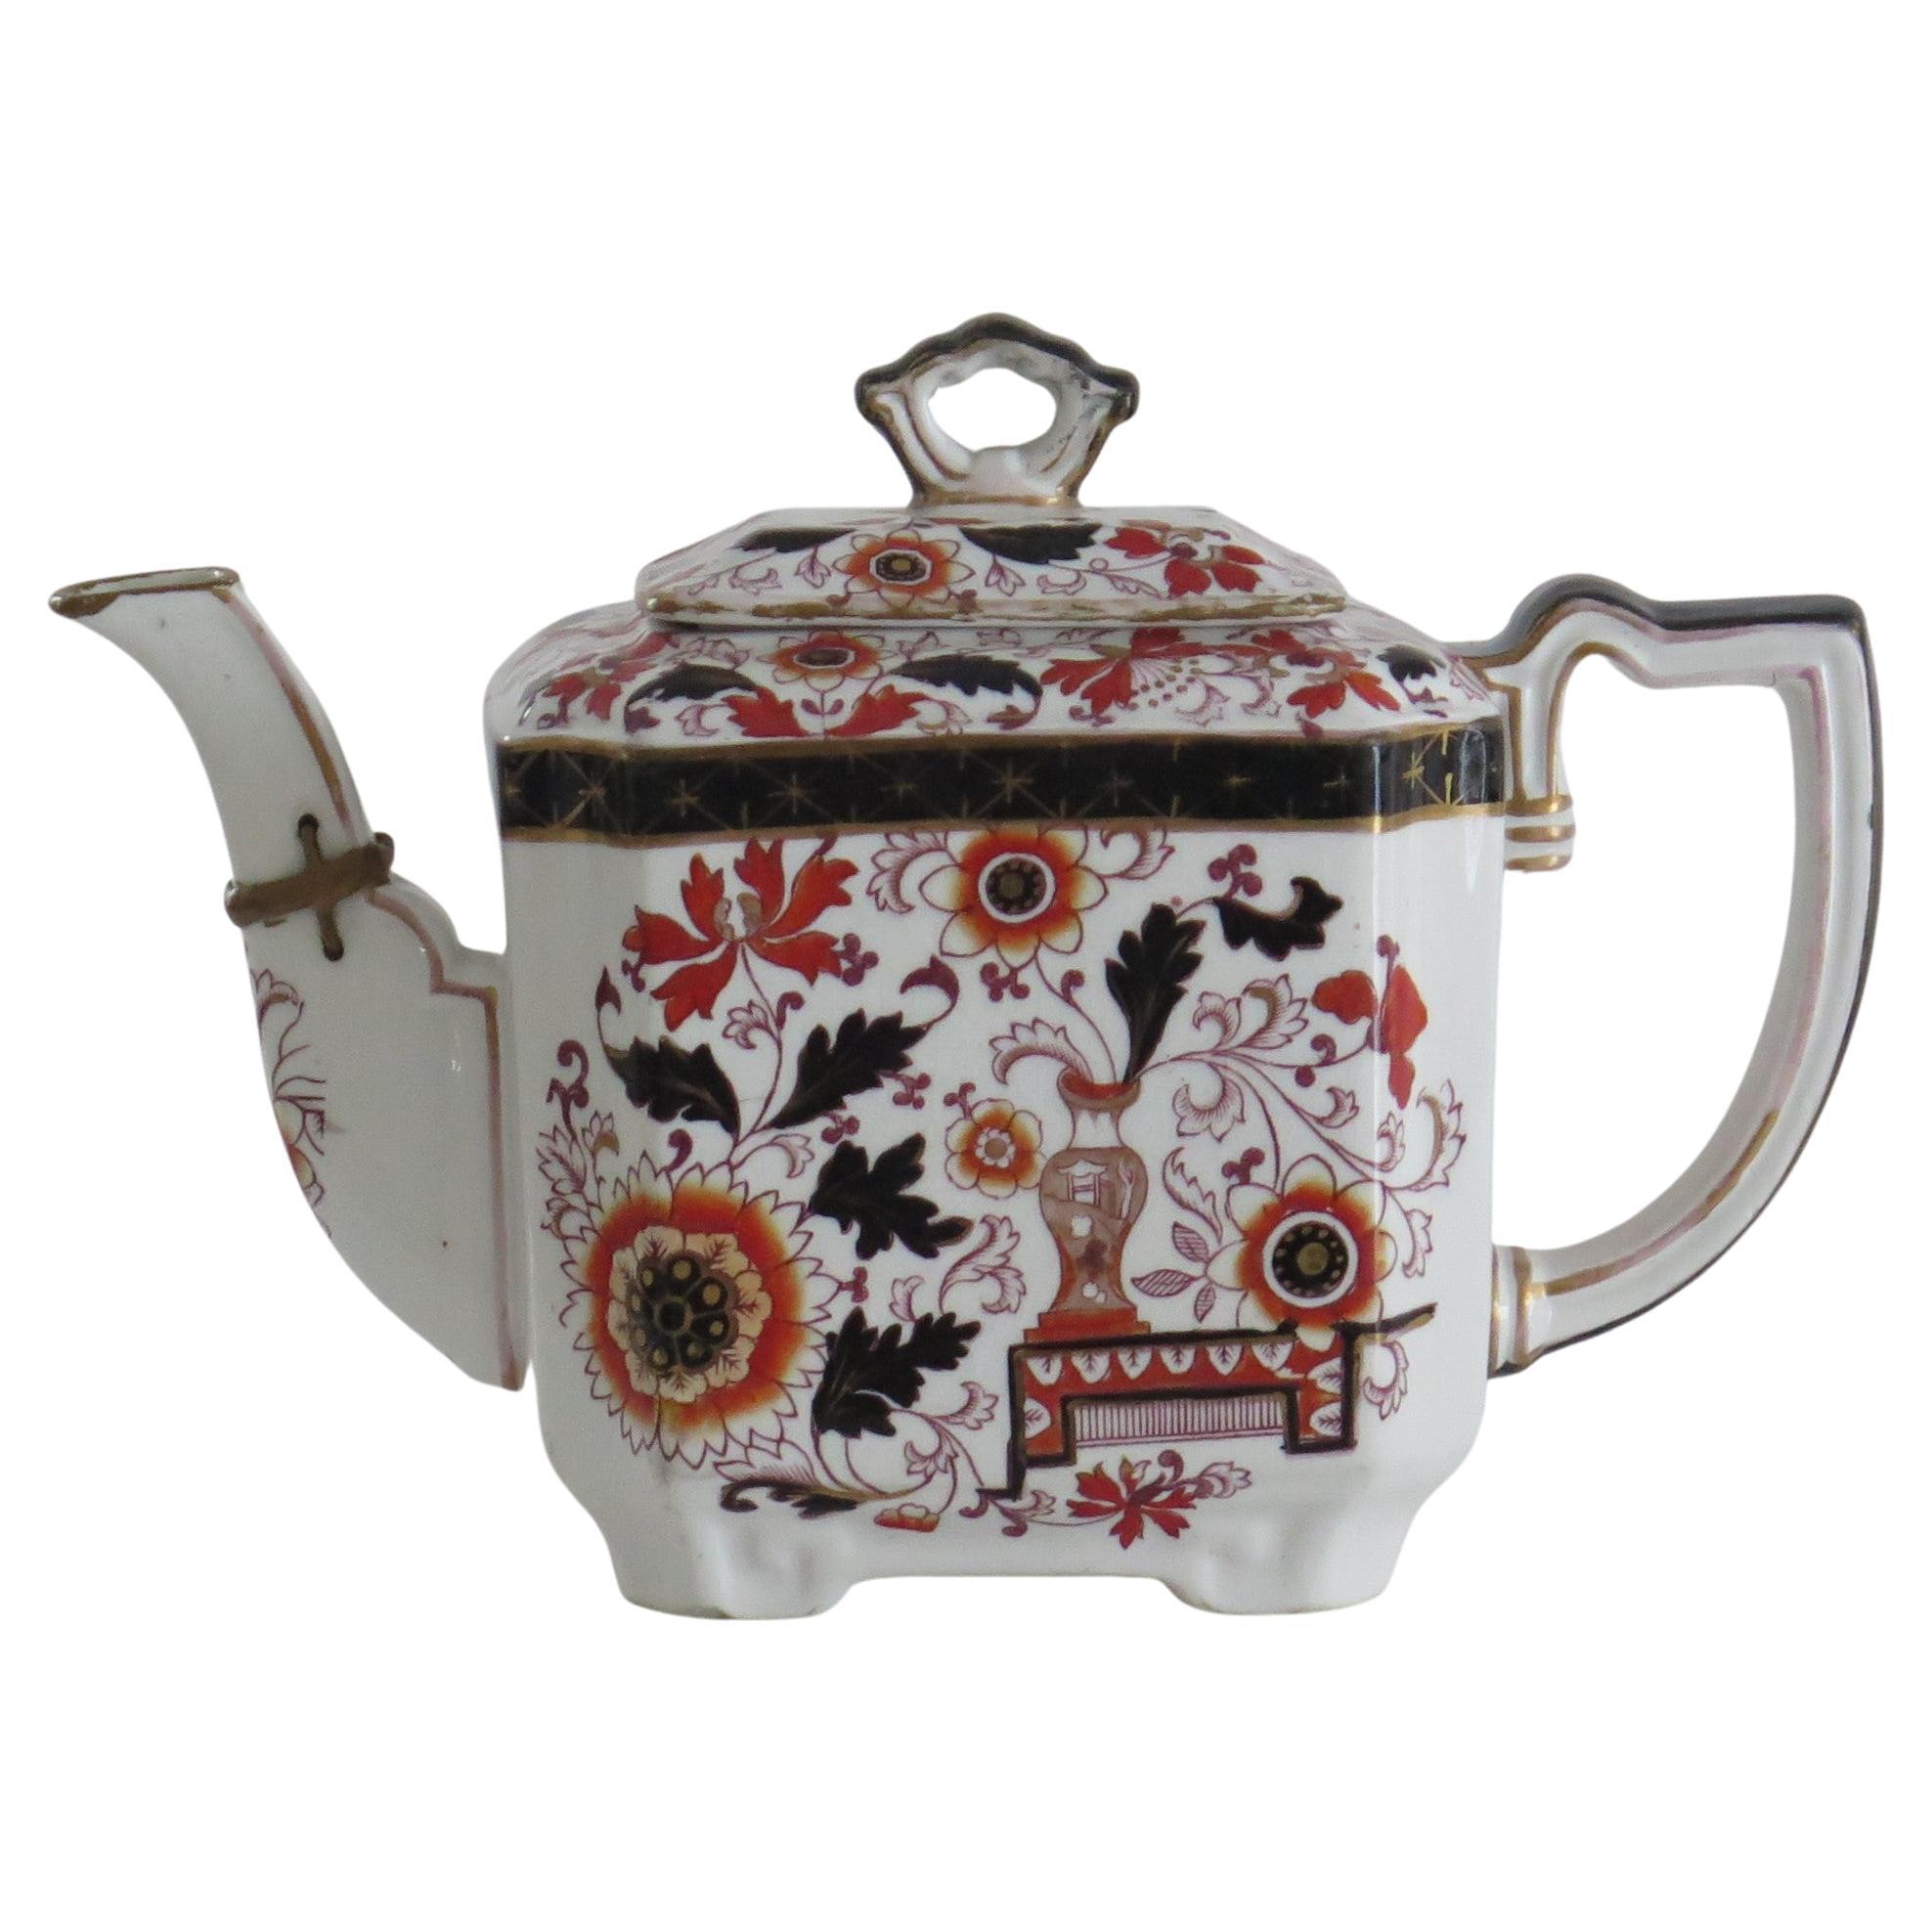 Mason's Ashworth's Ironstone Teapot in Old Japan Vase Pattern, circa 1875